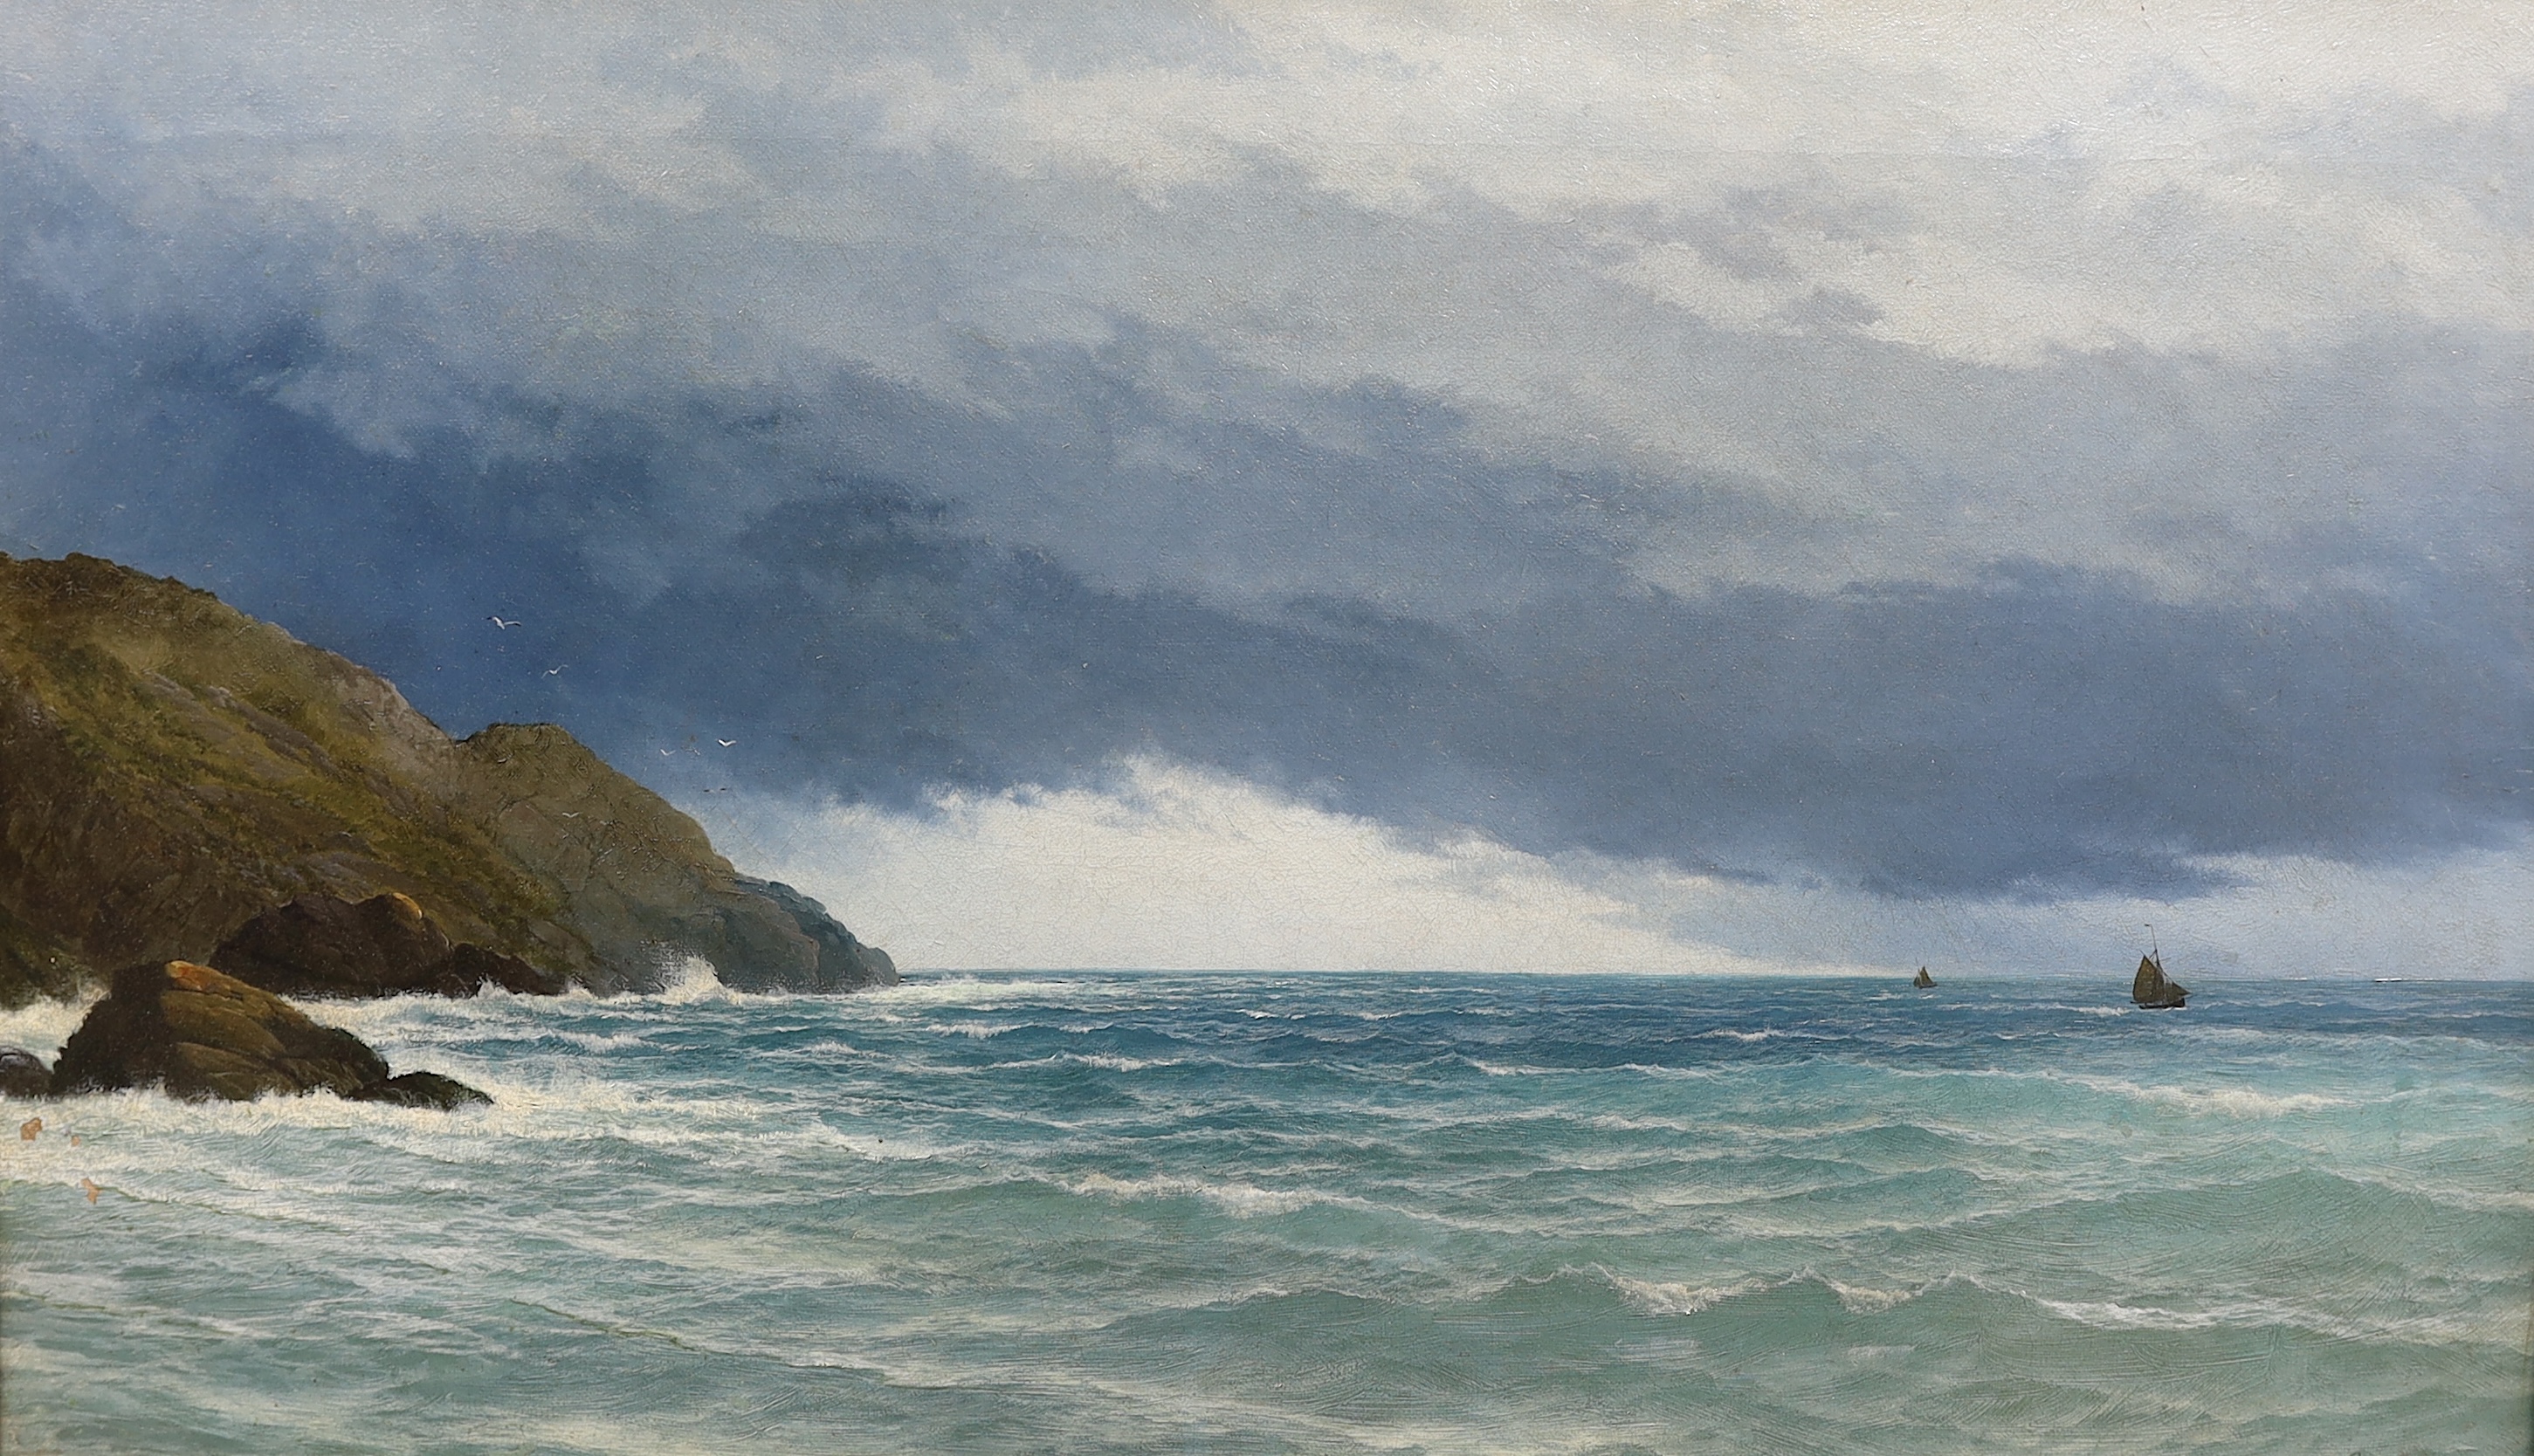 David James (British, 1853-1904), Shipping off the coast, oil on canvas, 74.5 x 43.5cm